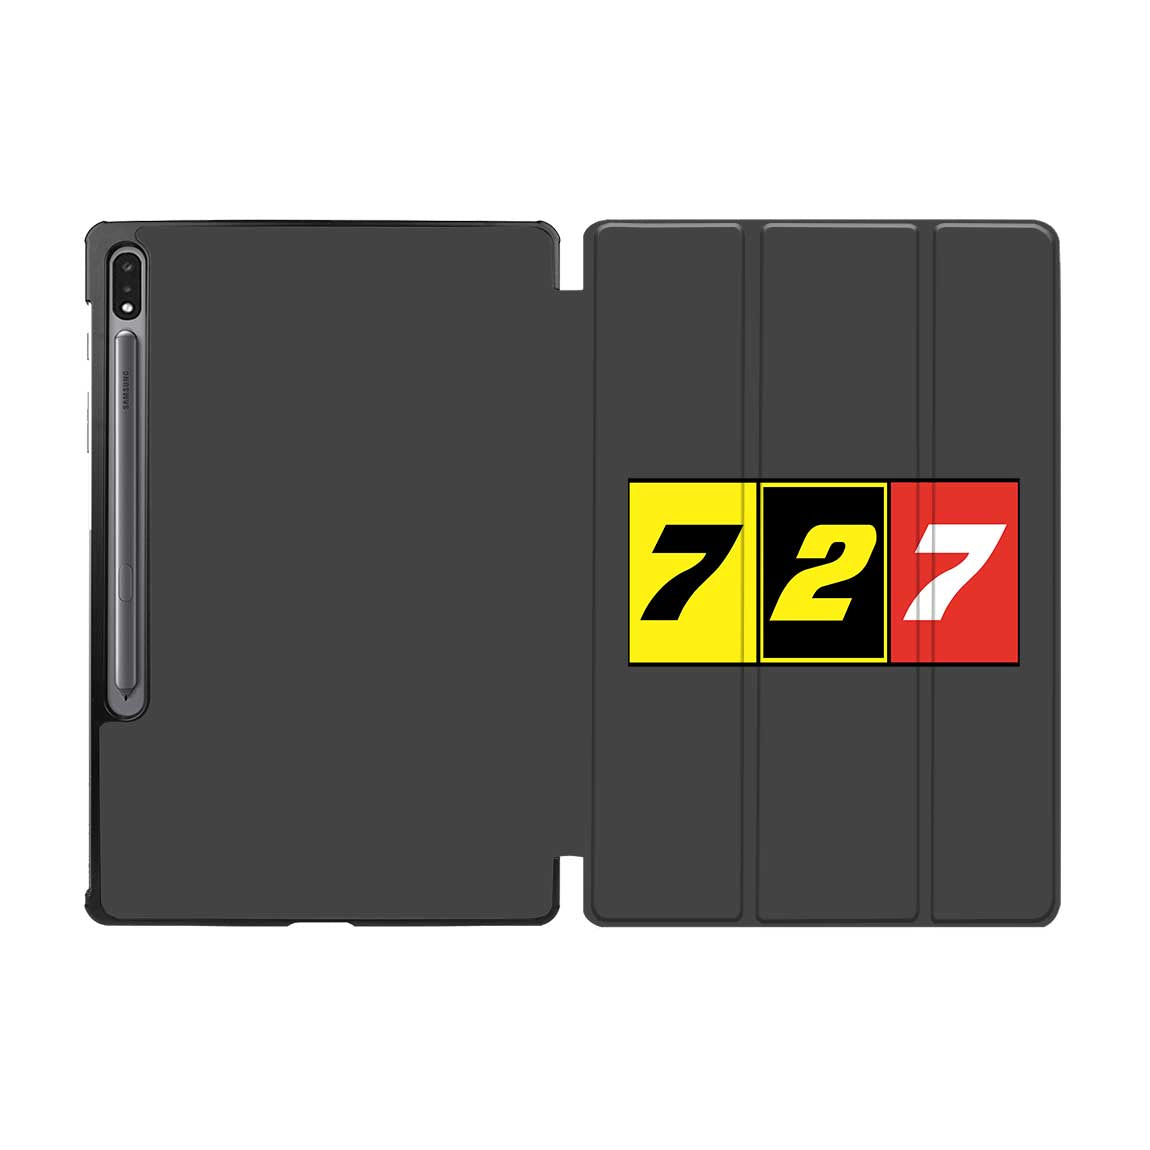 Flat Colourful 727 Designed Samsung Tablet Cases